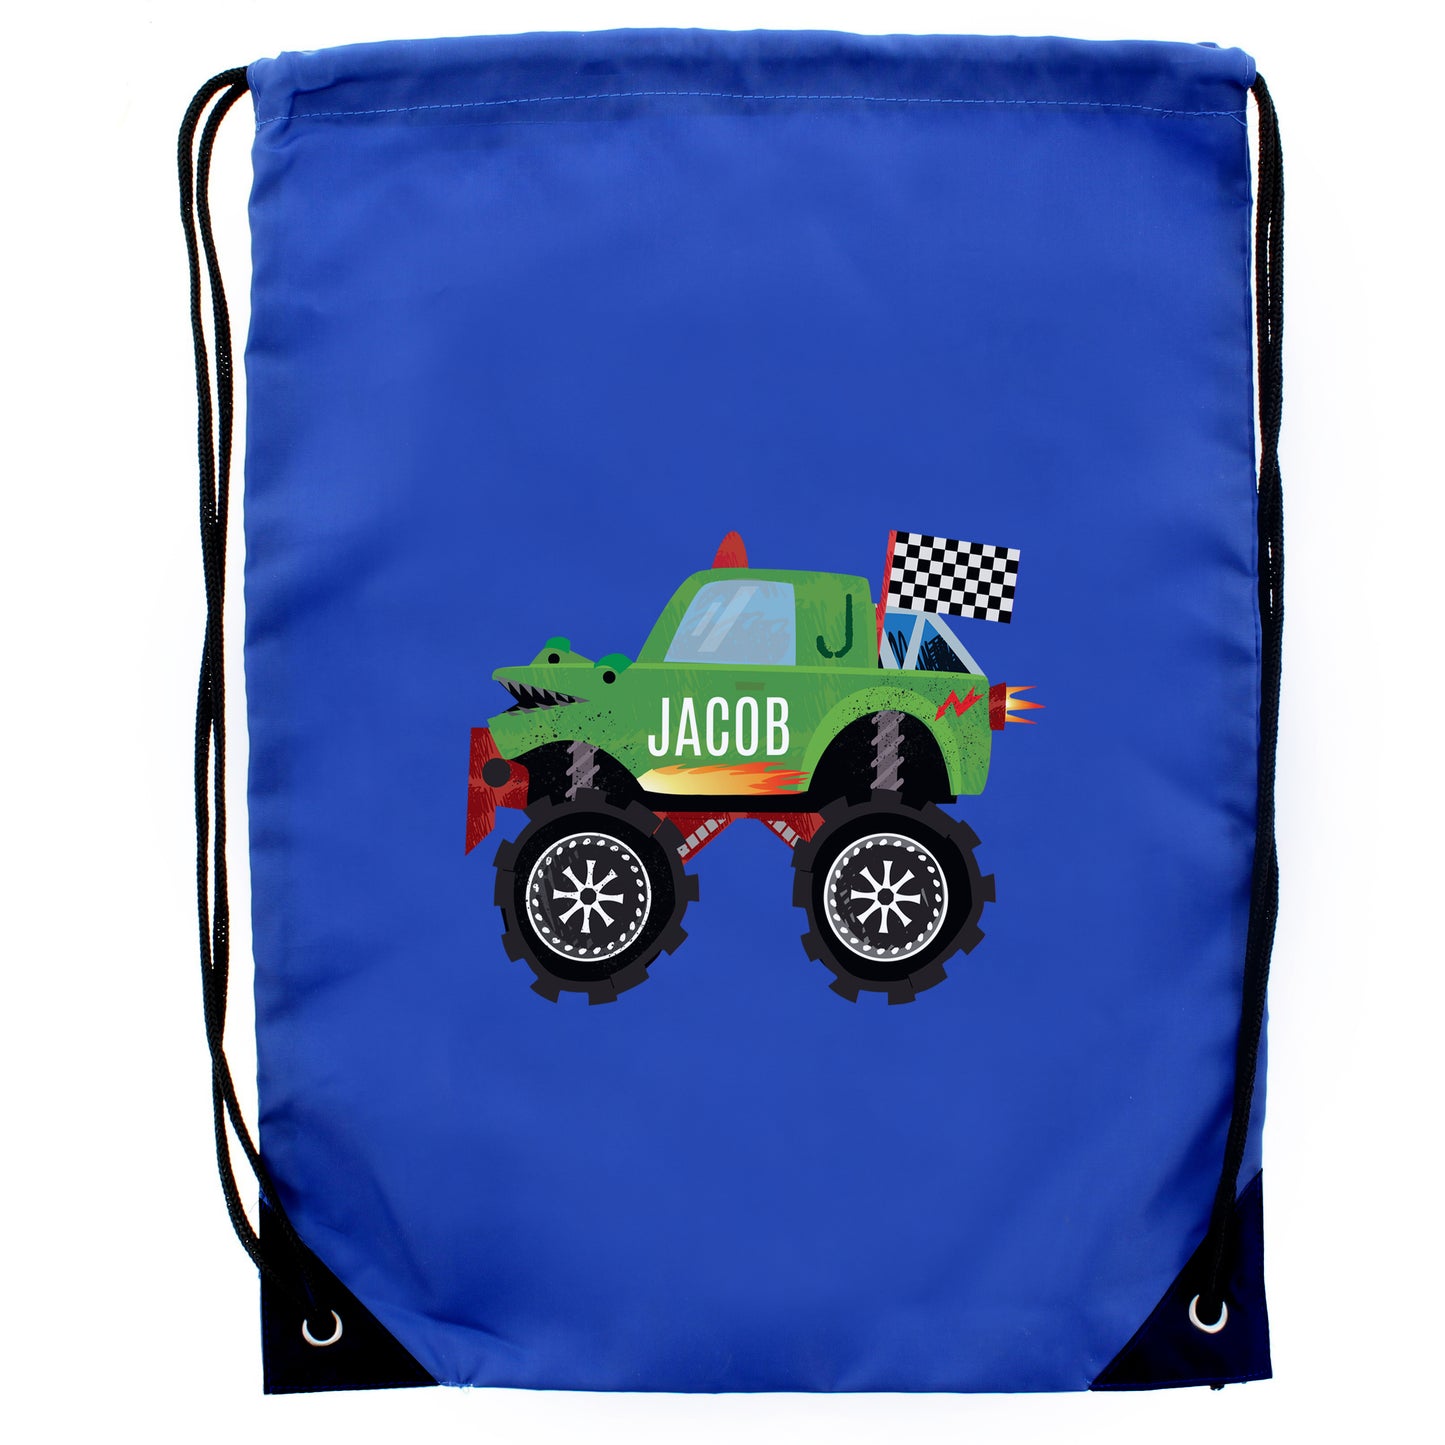 Personalised Monster Truck Blue Kit Bag - Personalise It!